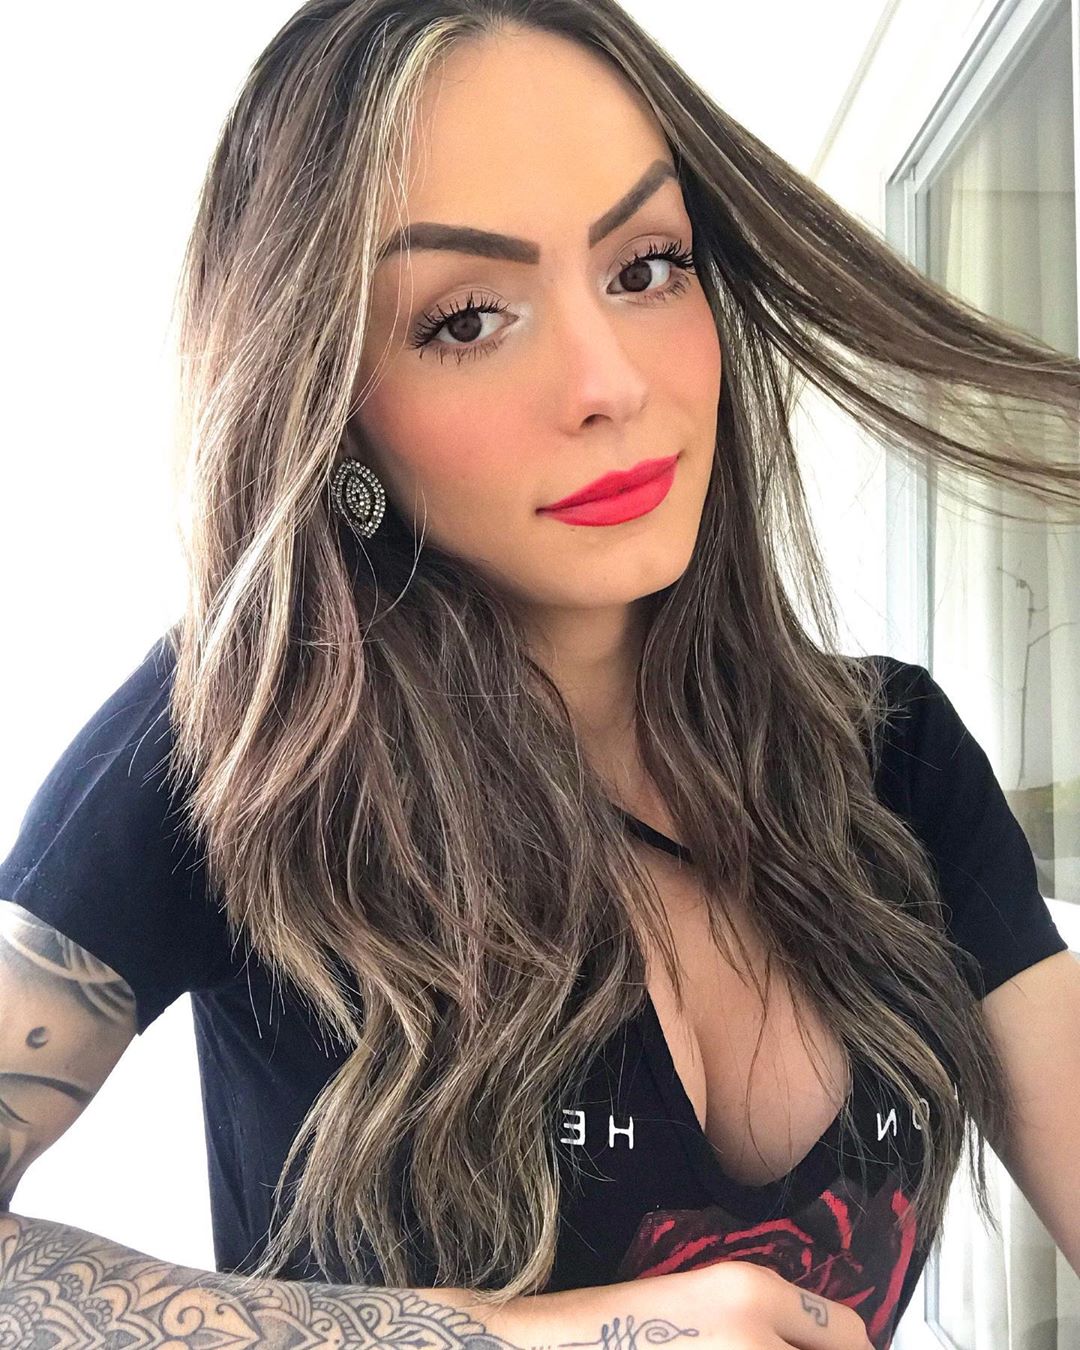 Victoria Carioni – Most Beautiful Transwoman from Brazil Instagram